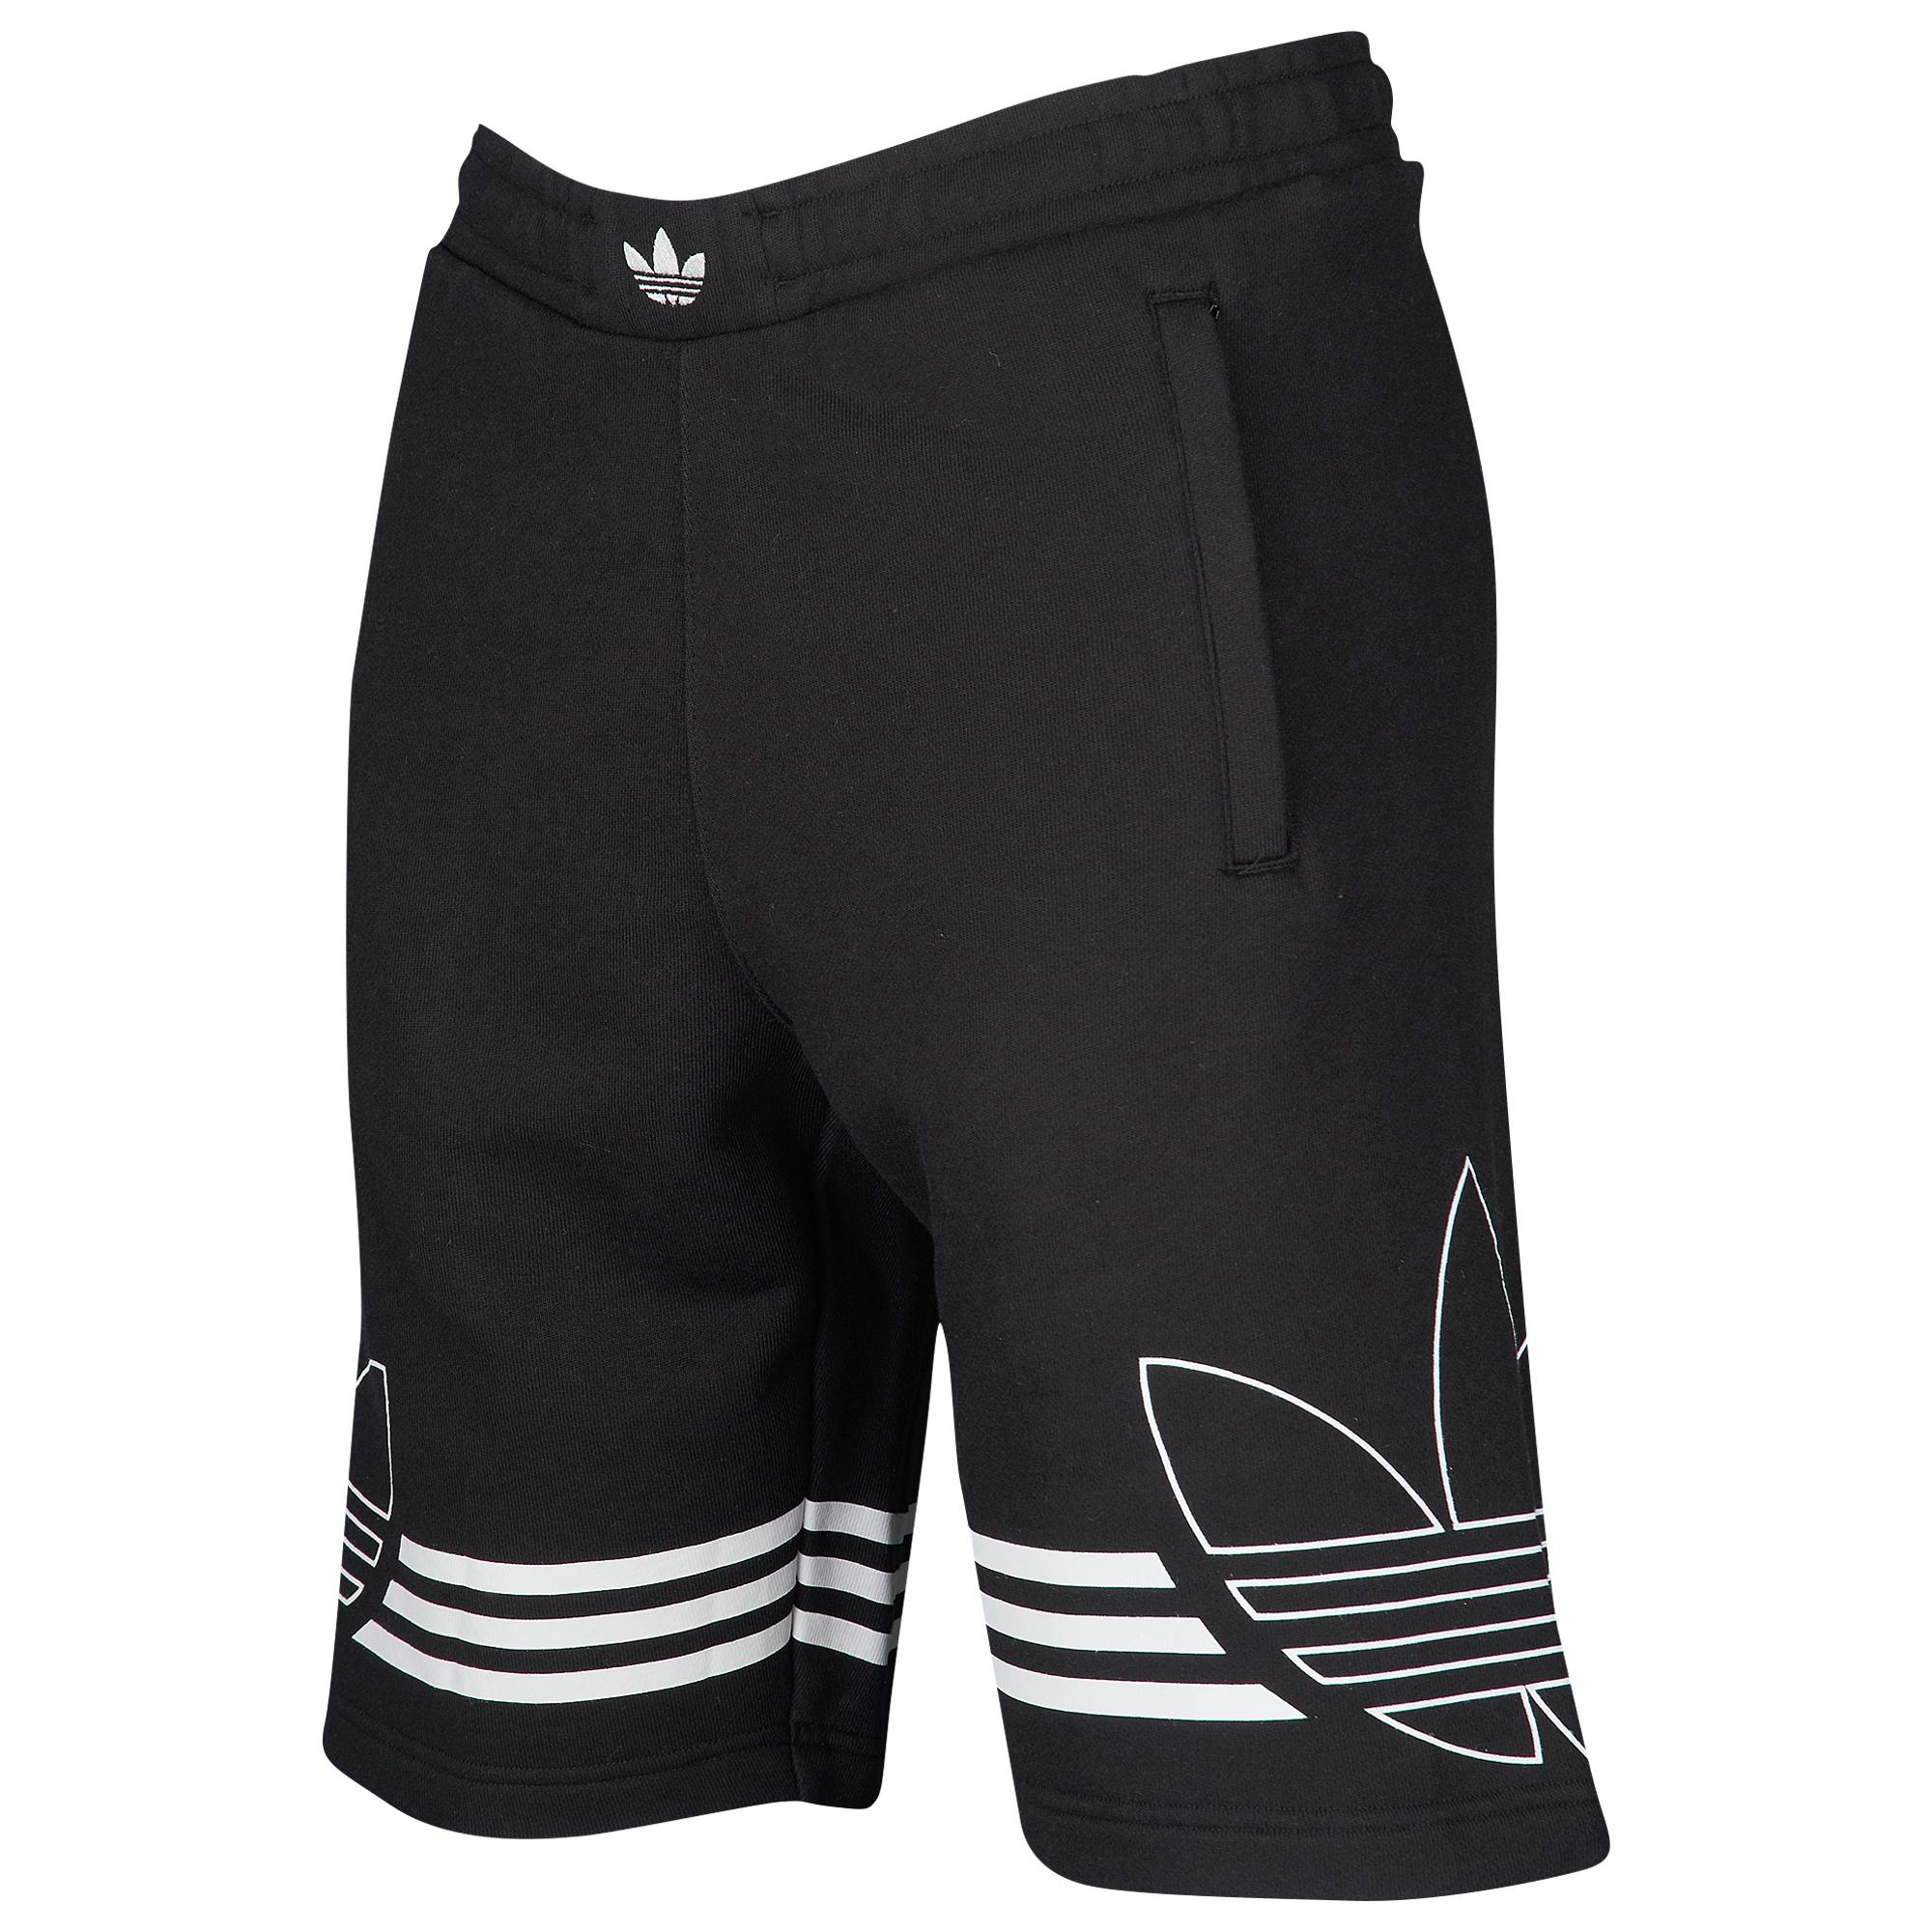 adidas Originals Outline Shorts in Black for Men - Lyst